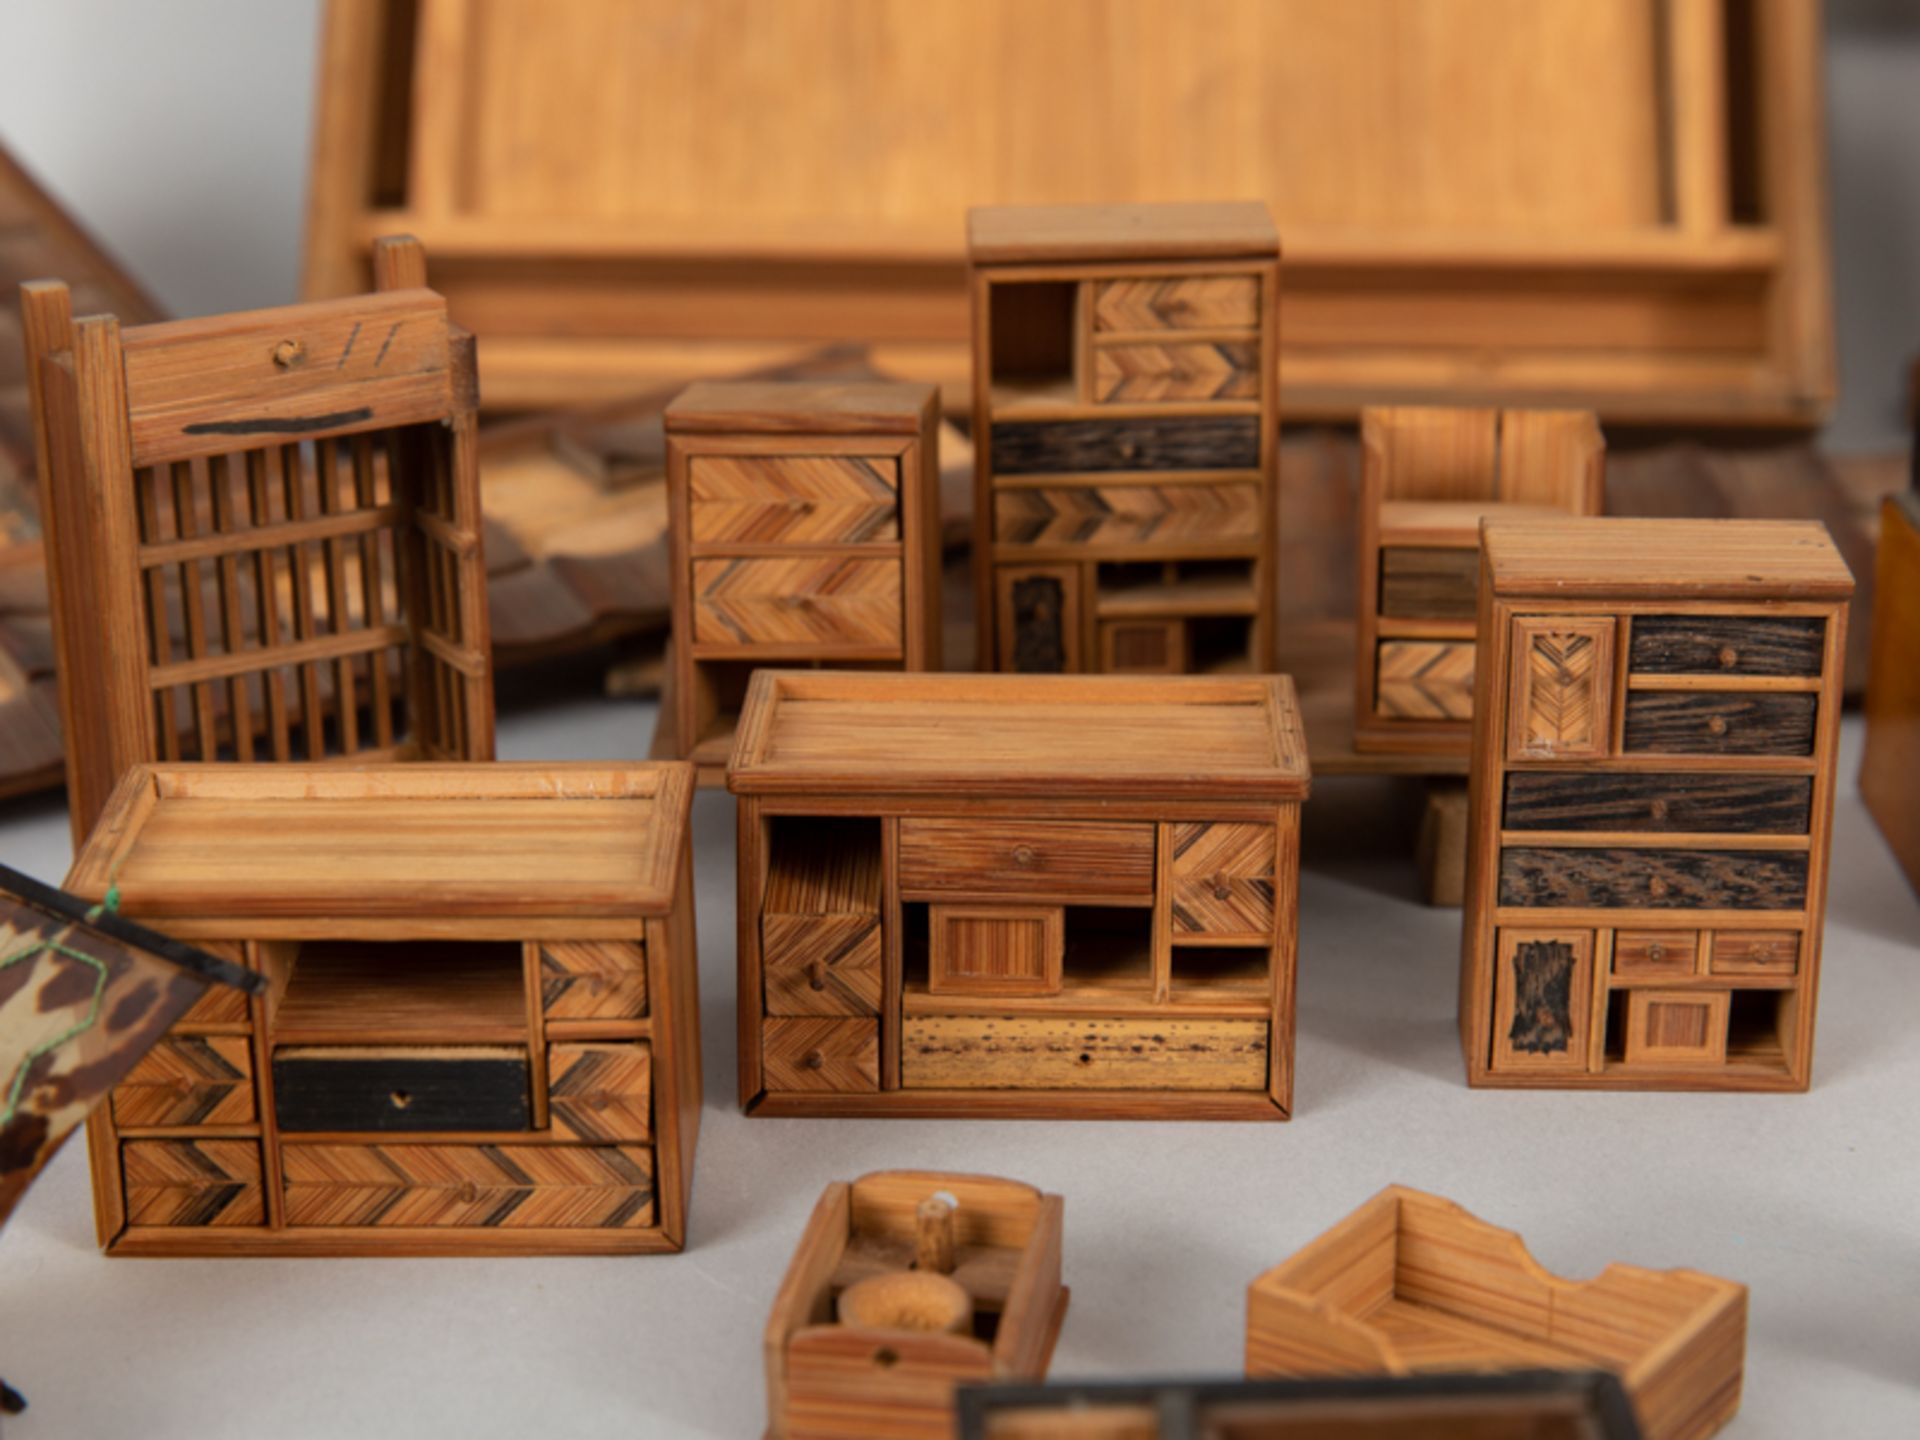 Modellhaus aus Holz / Kinderspielzeug, Japan, Meiji Zeit. - Image 7 of 22